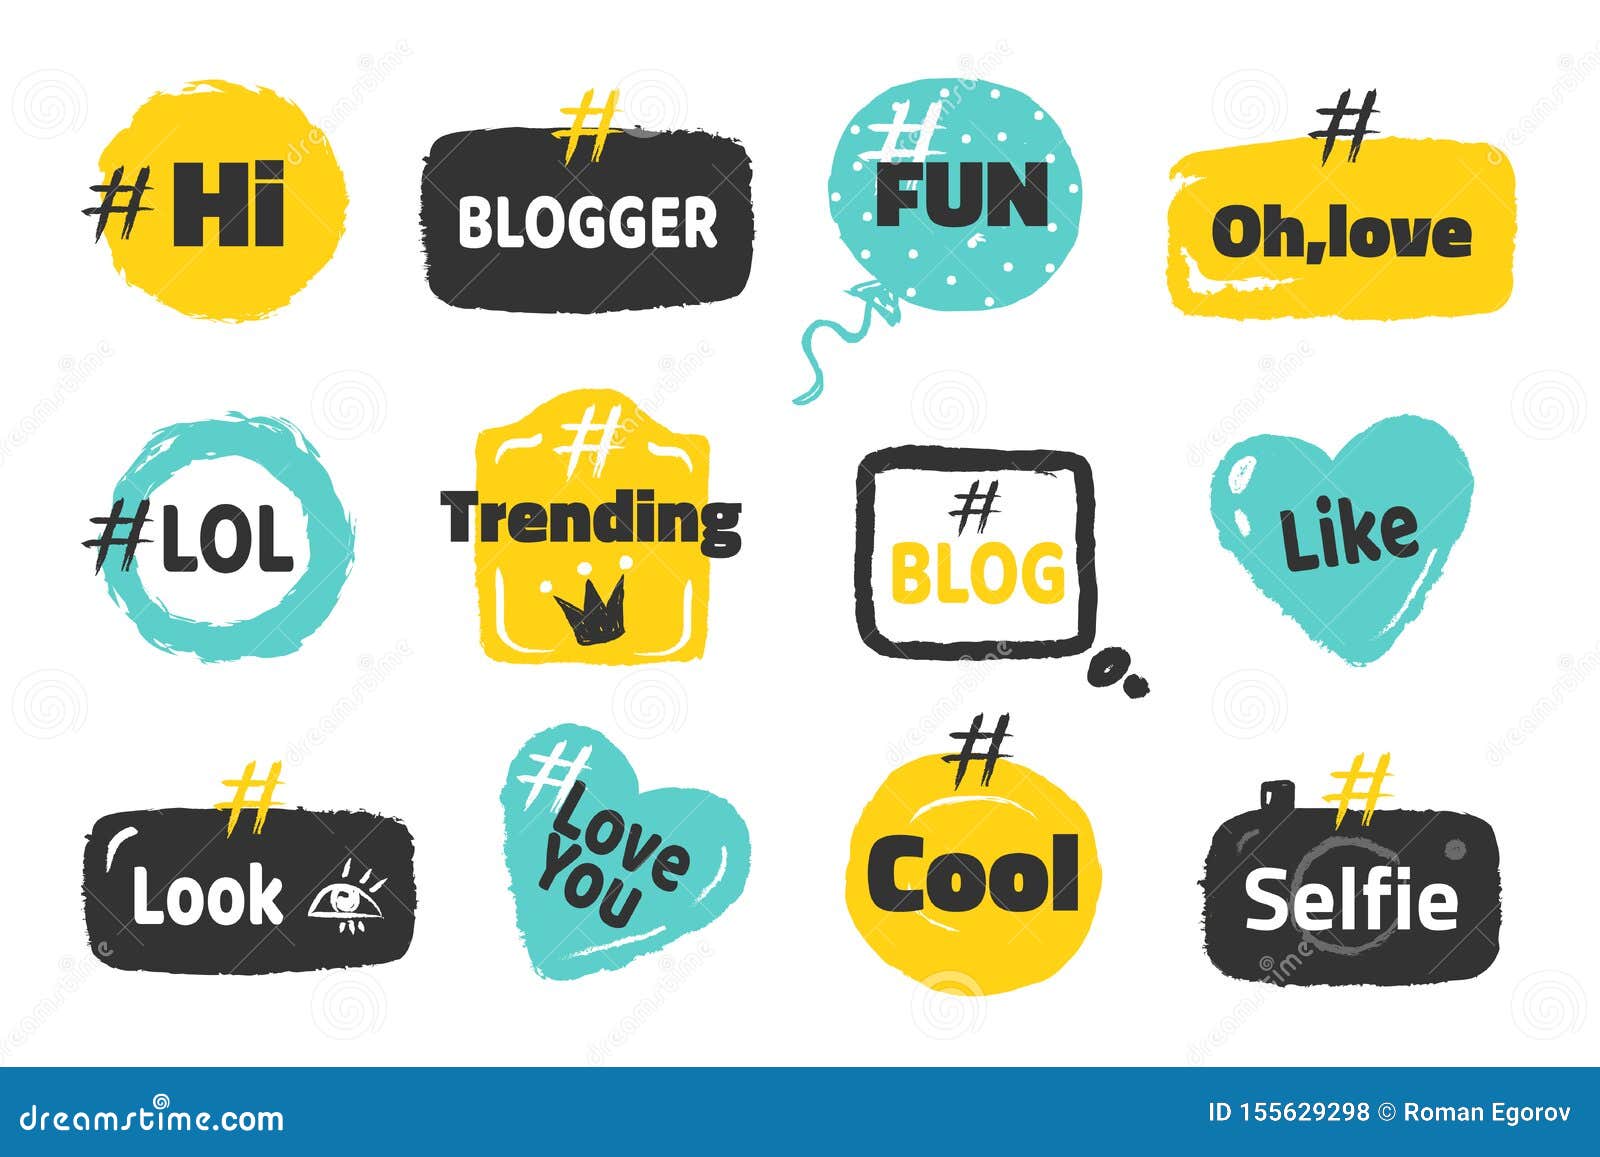 hashtag social banners. trendy blog slang logos concept, fun post tag  on speech bubble.  modern social